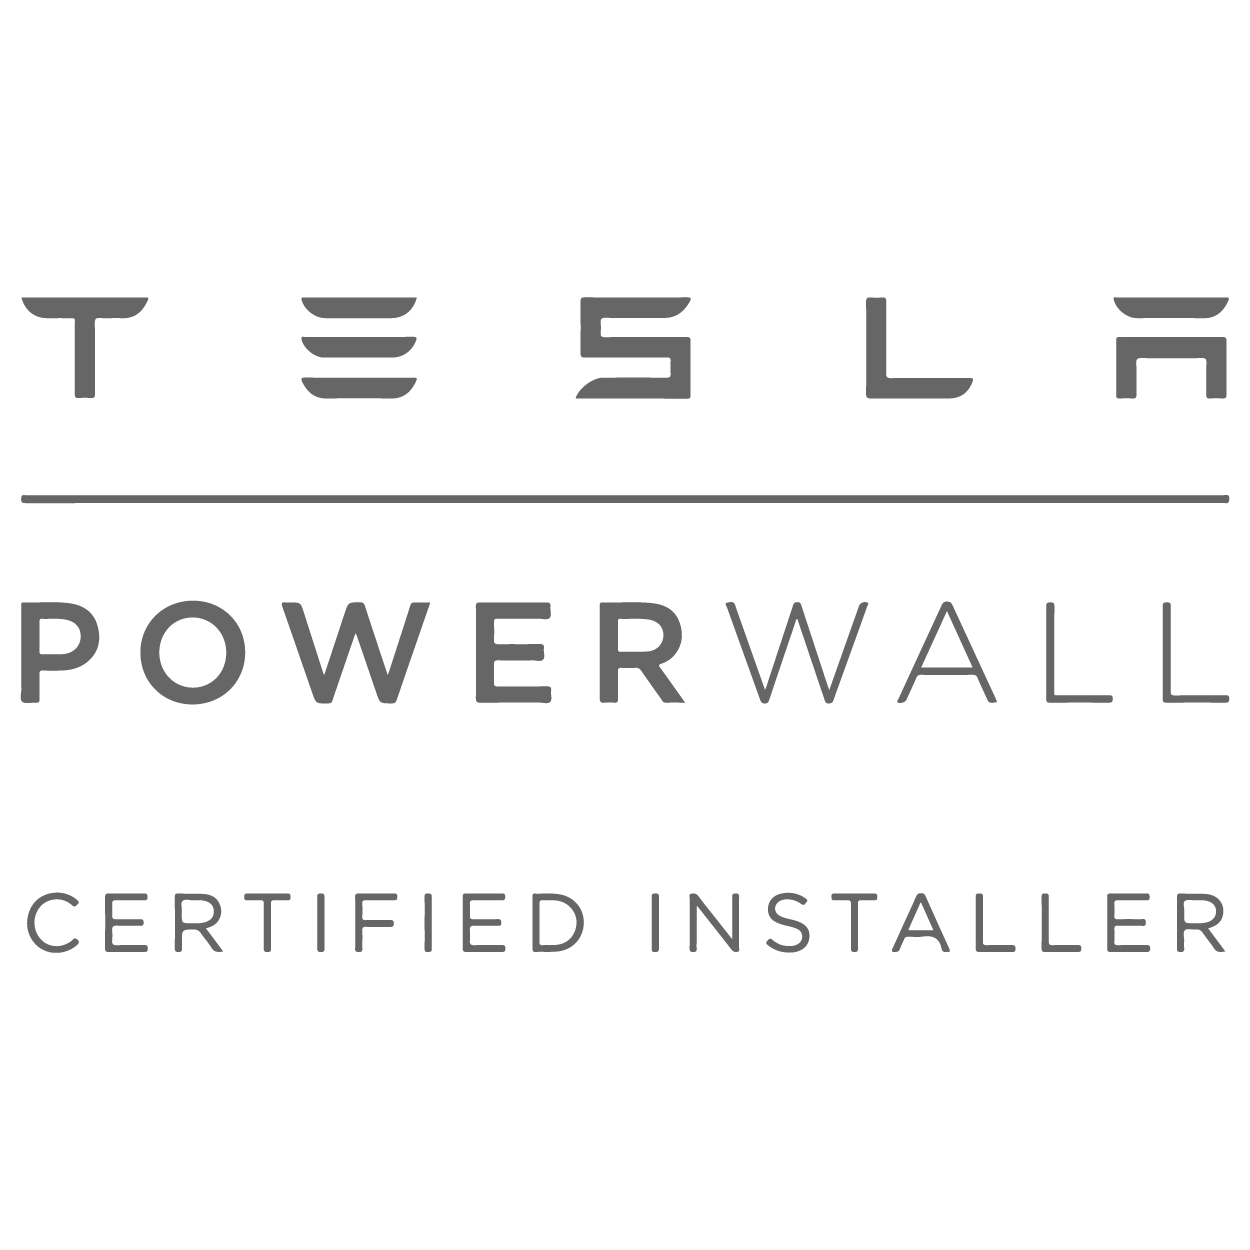 Tesla Powerwall Certified Installer Logo renu